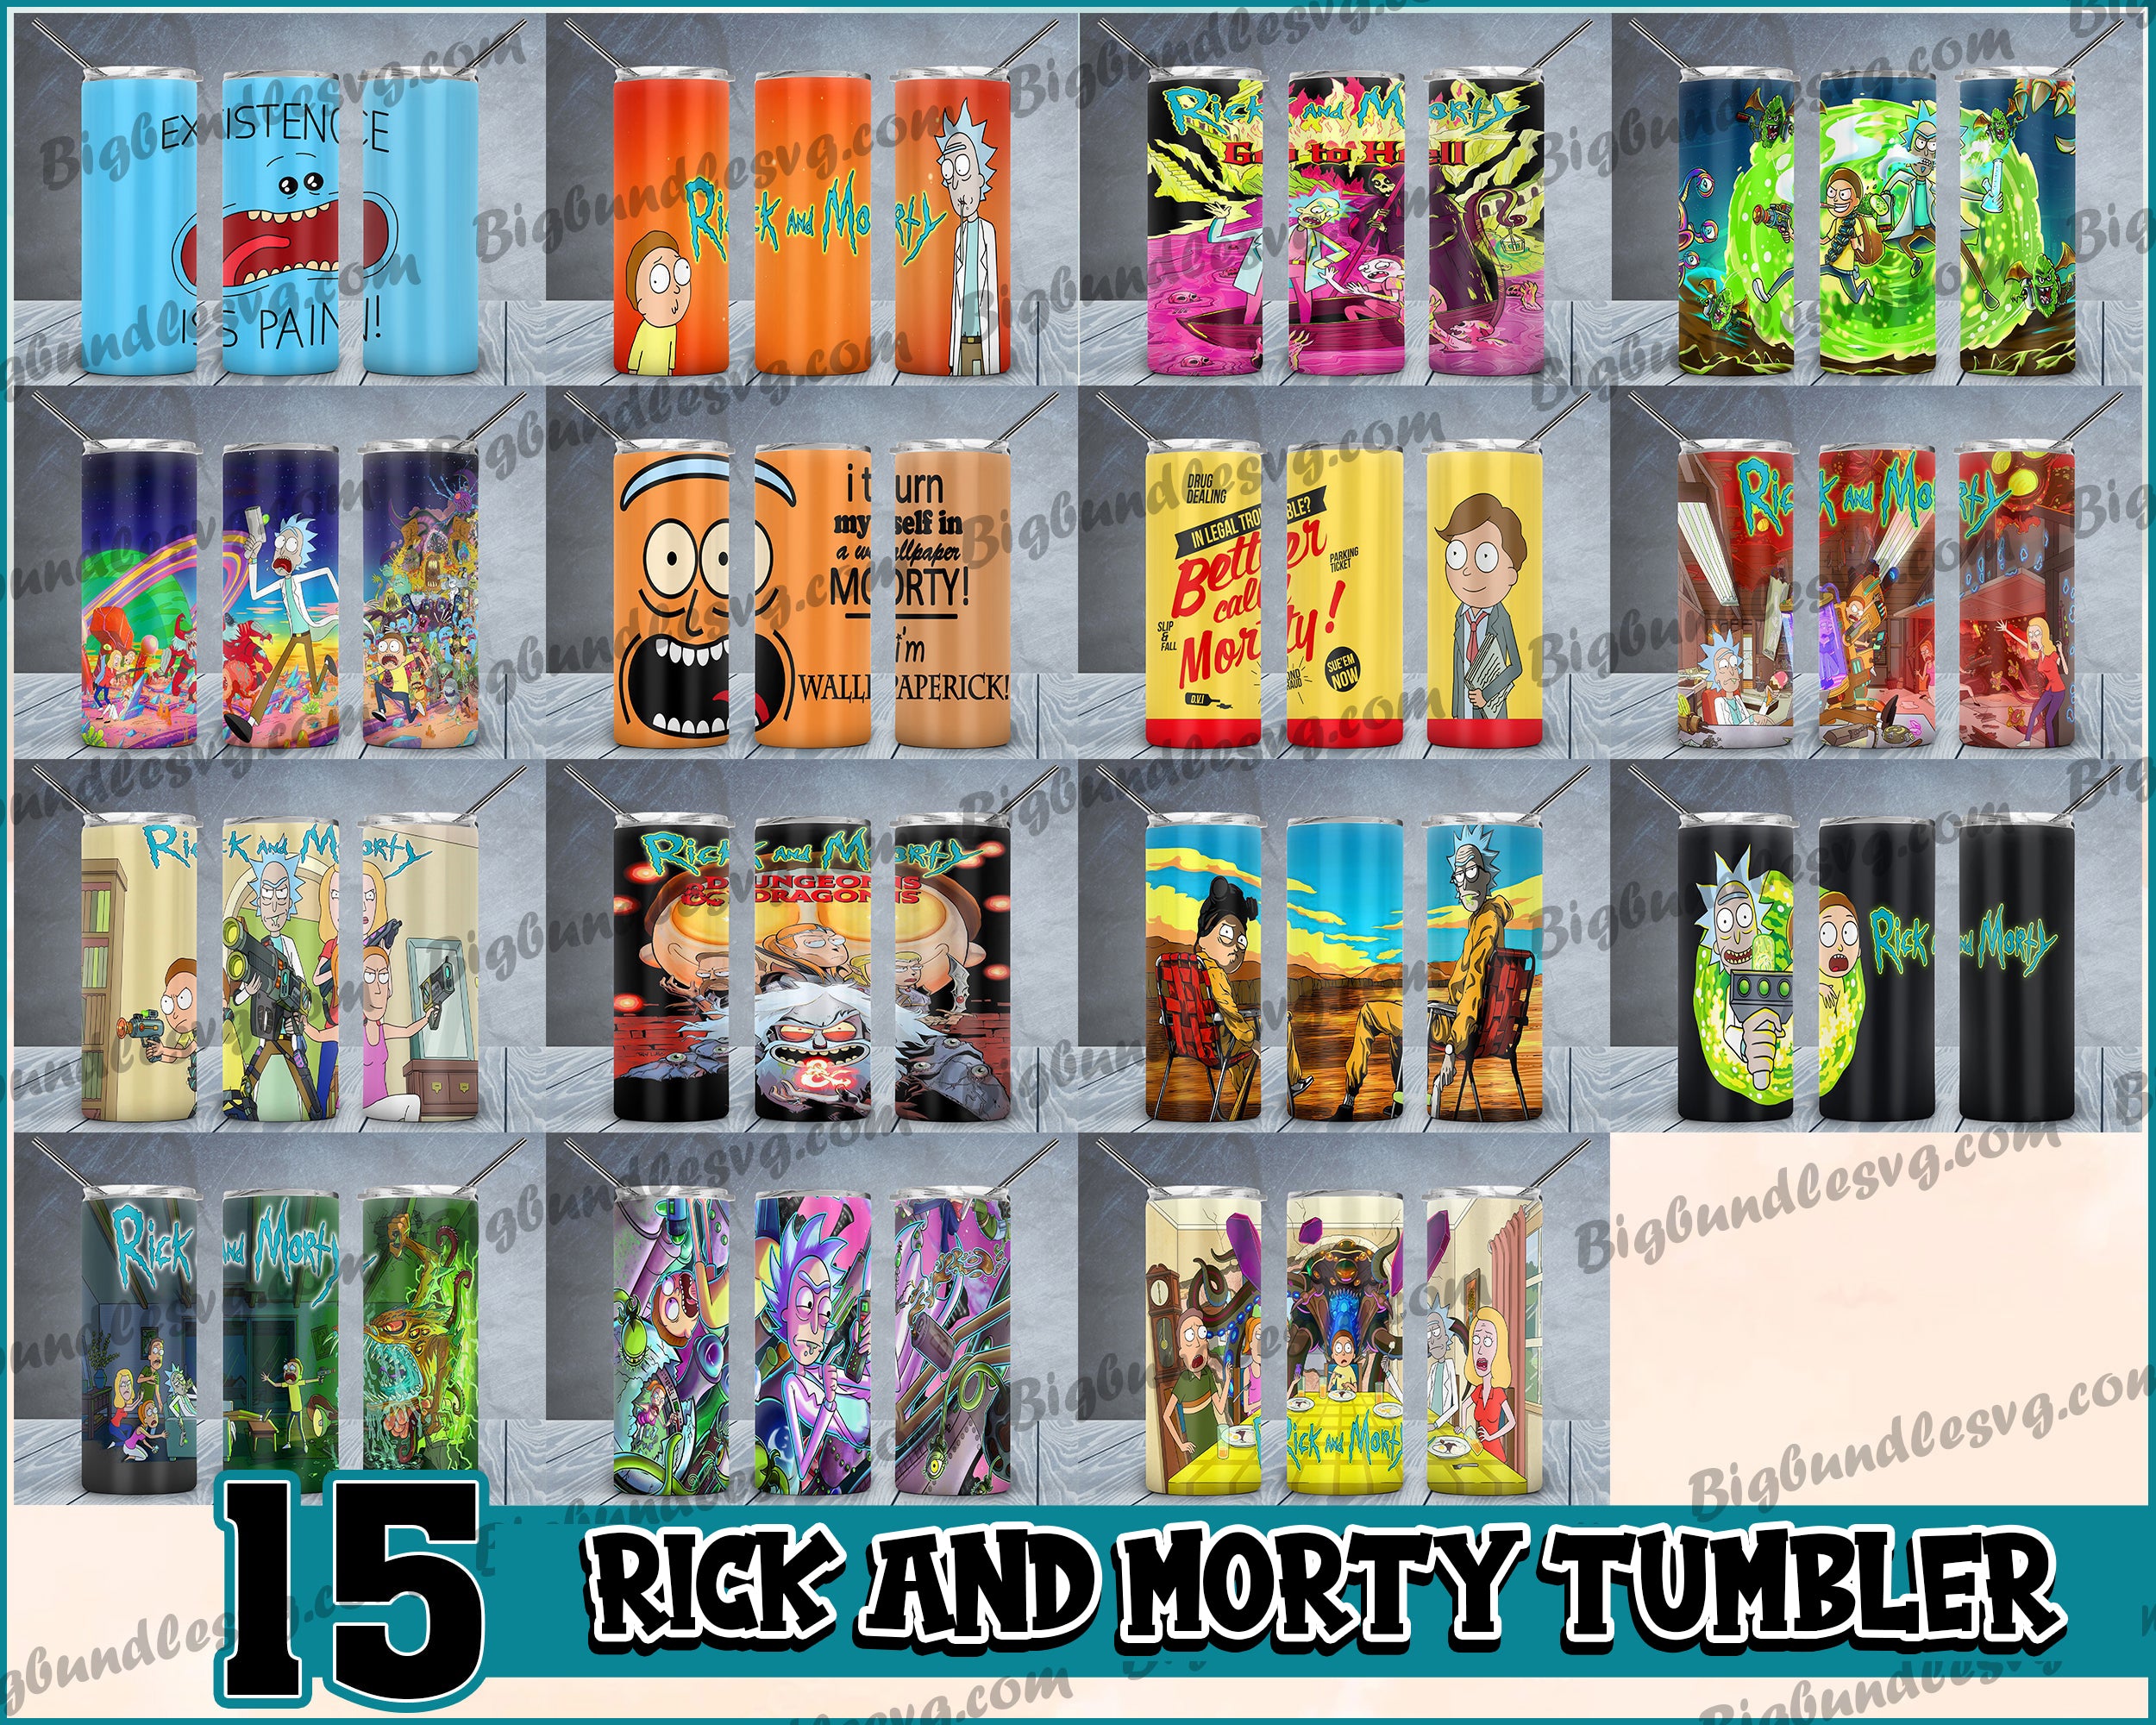 Rick and morty Tumbler - Rick and morty PNG - Tumbler design - Digital download